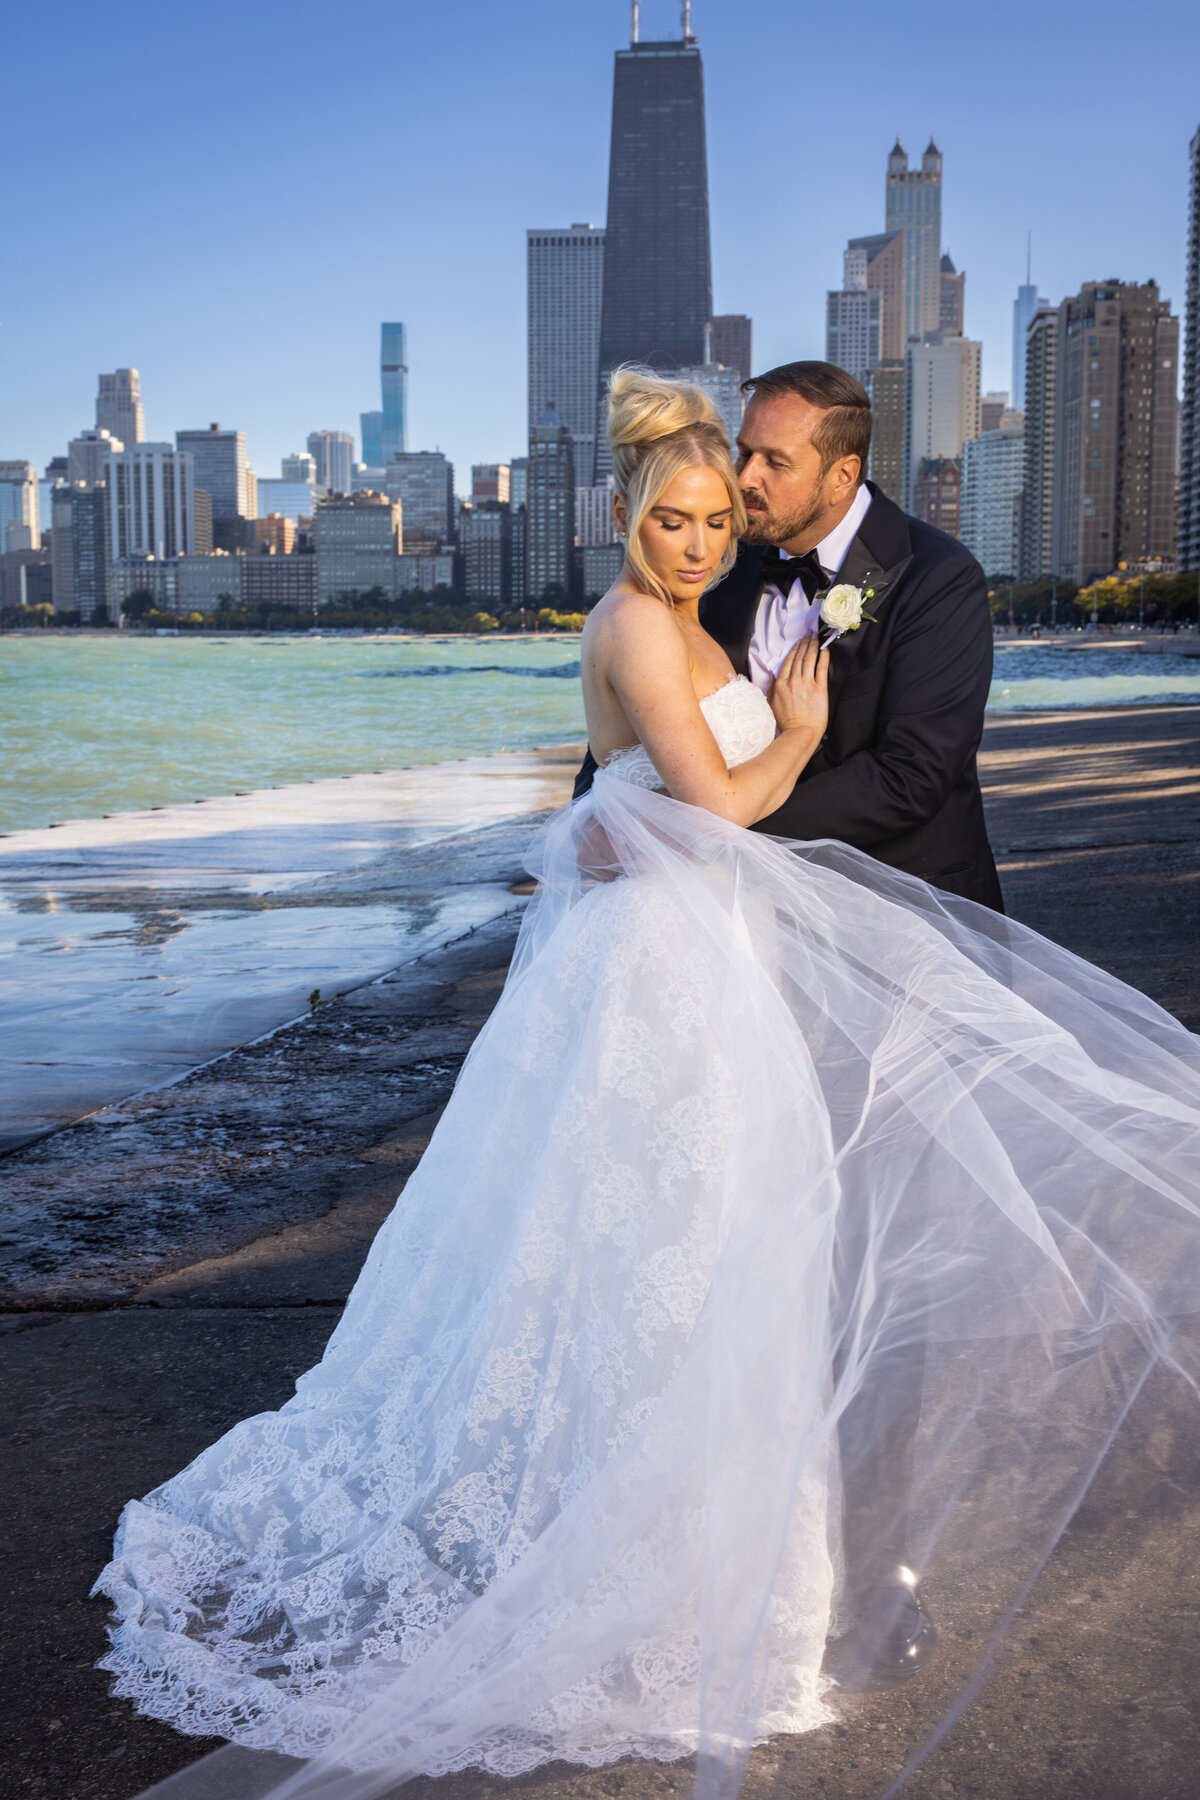 77-RPM-Chicago-Wedding-Photos-Lauren-Ashlely-Studios